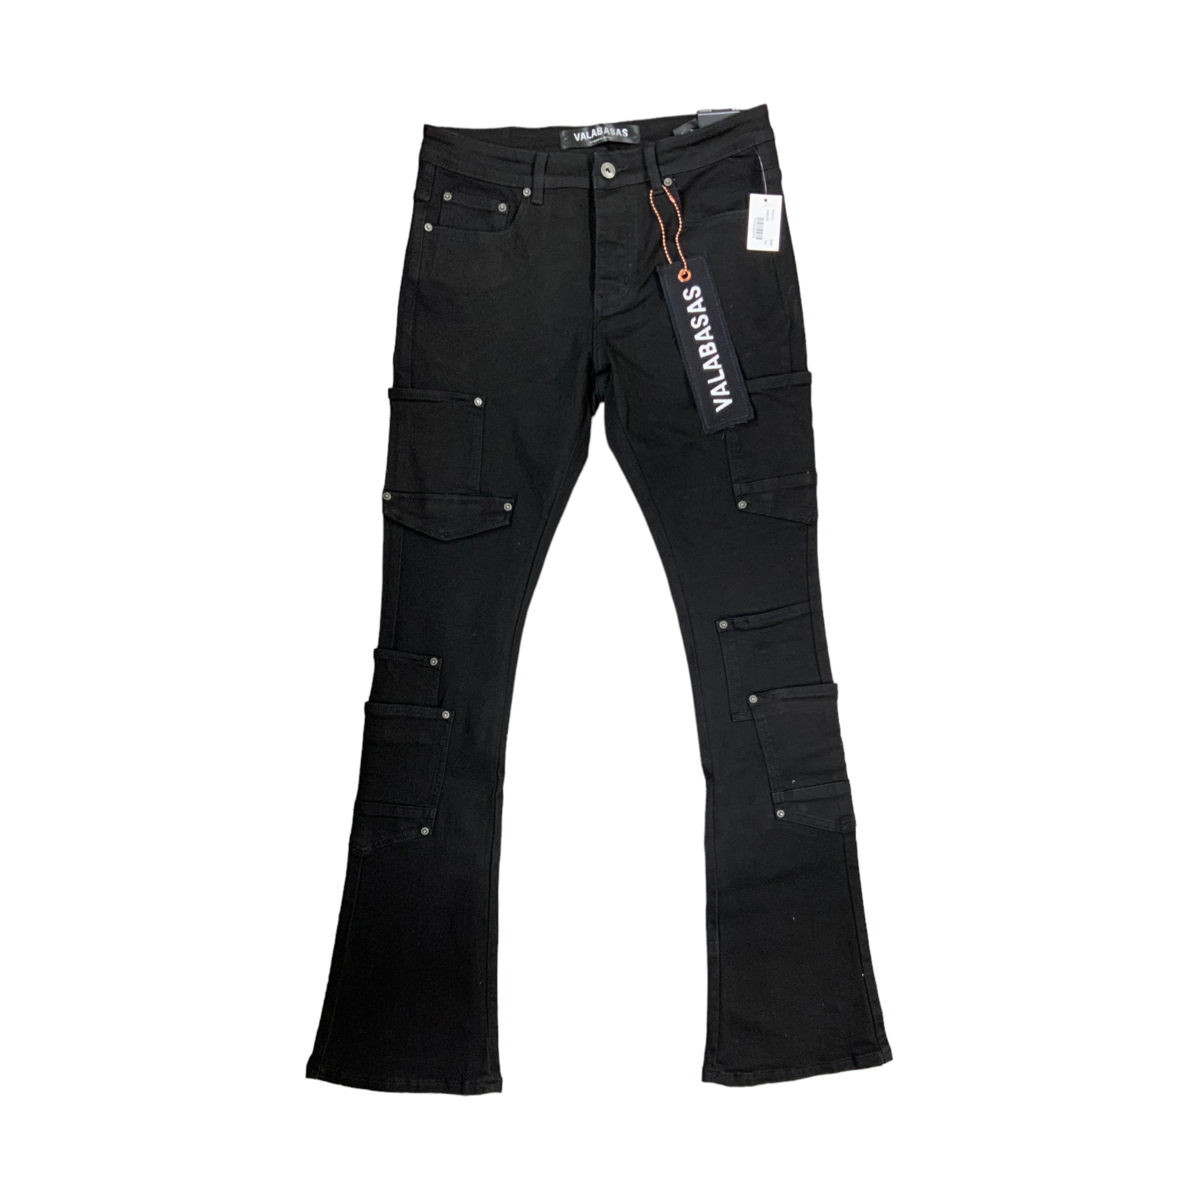 Valabasas "Pocros" Black Stacked Flare Jeans